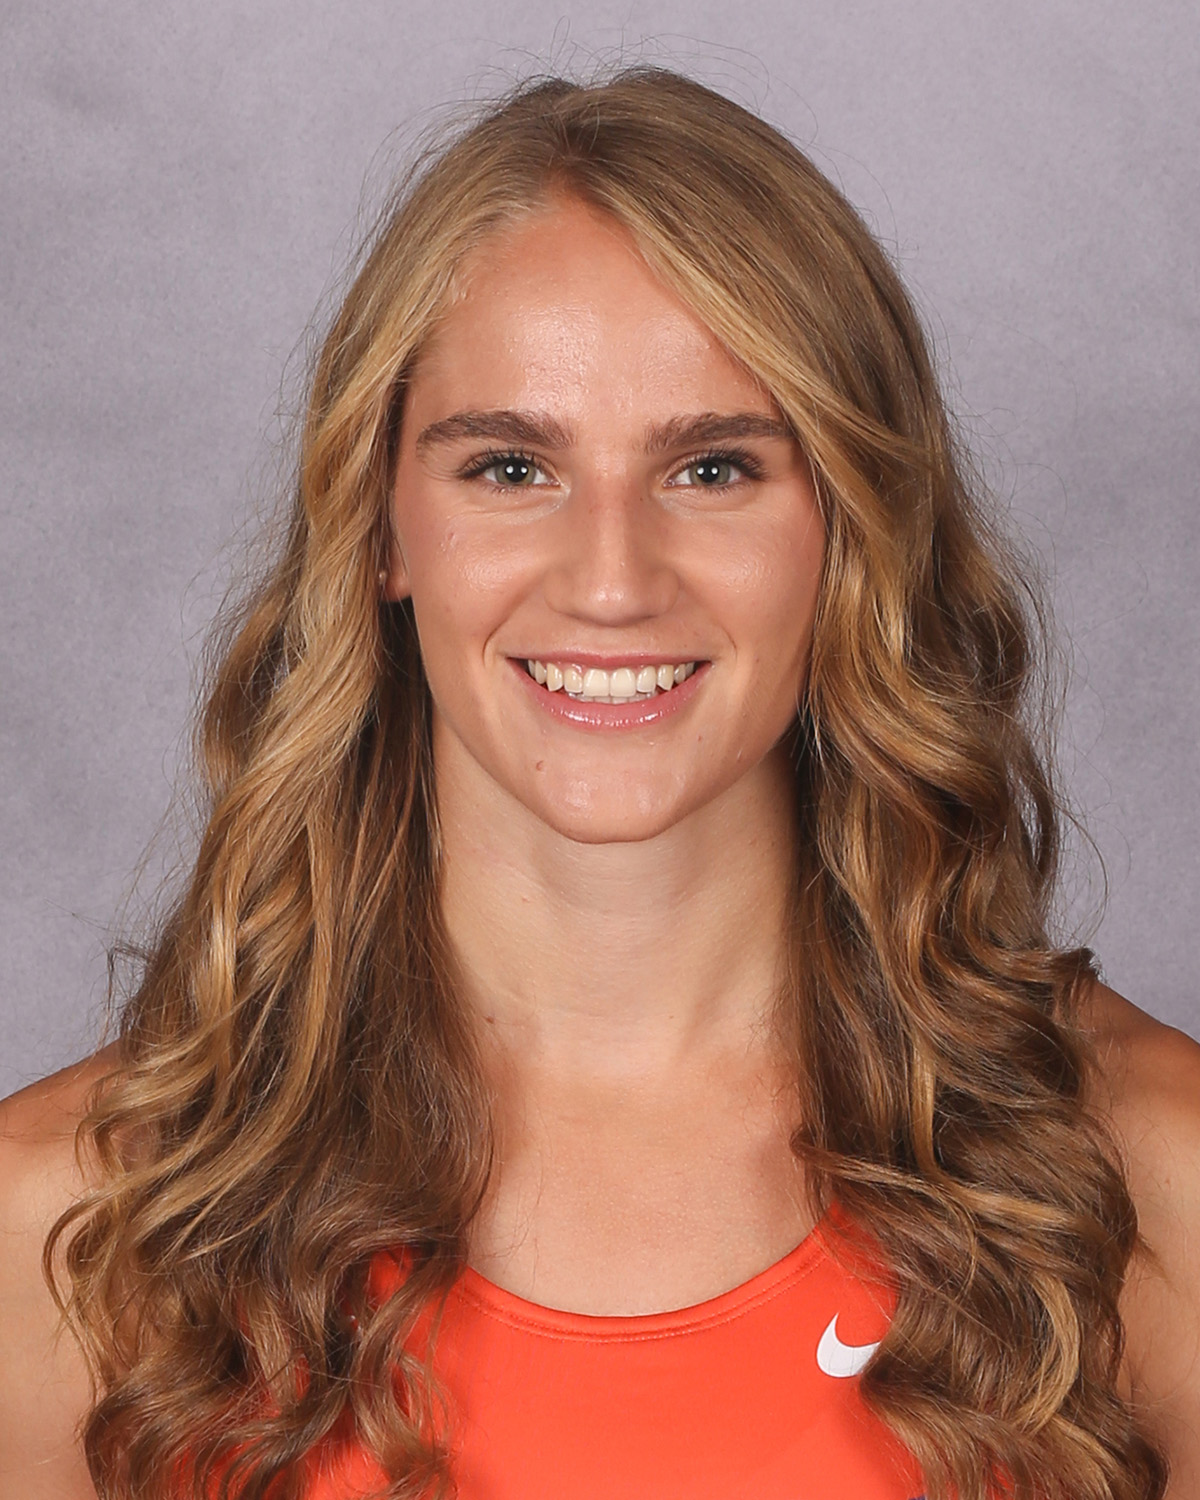 Antoinette van der Merwe - Track & Field - Clemson University Athletics